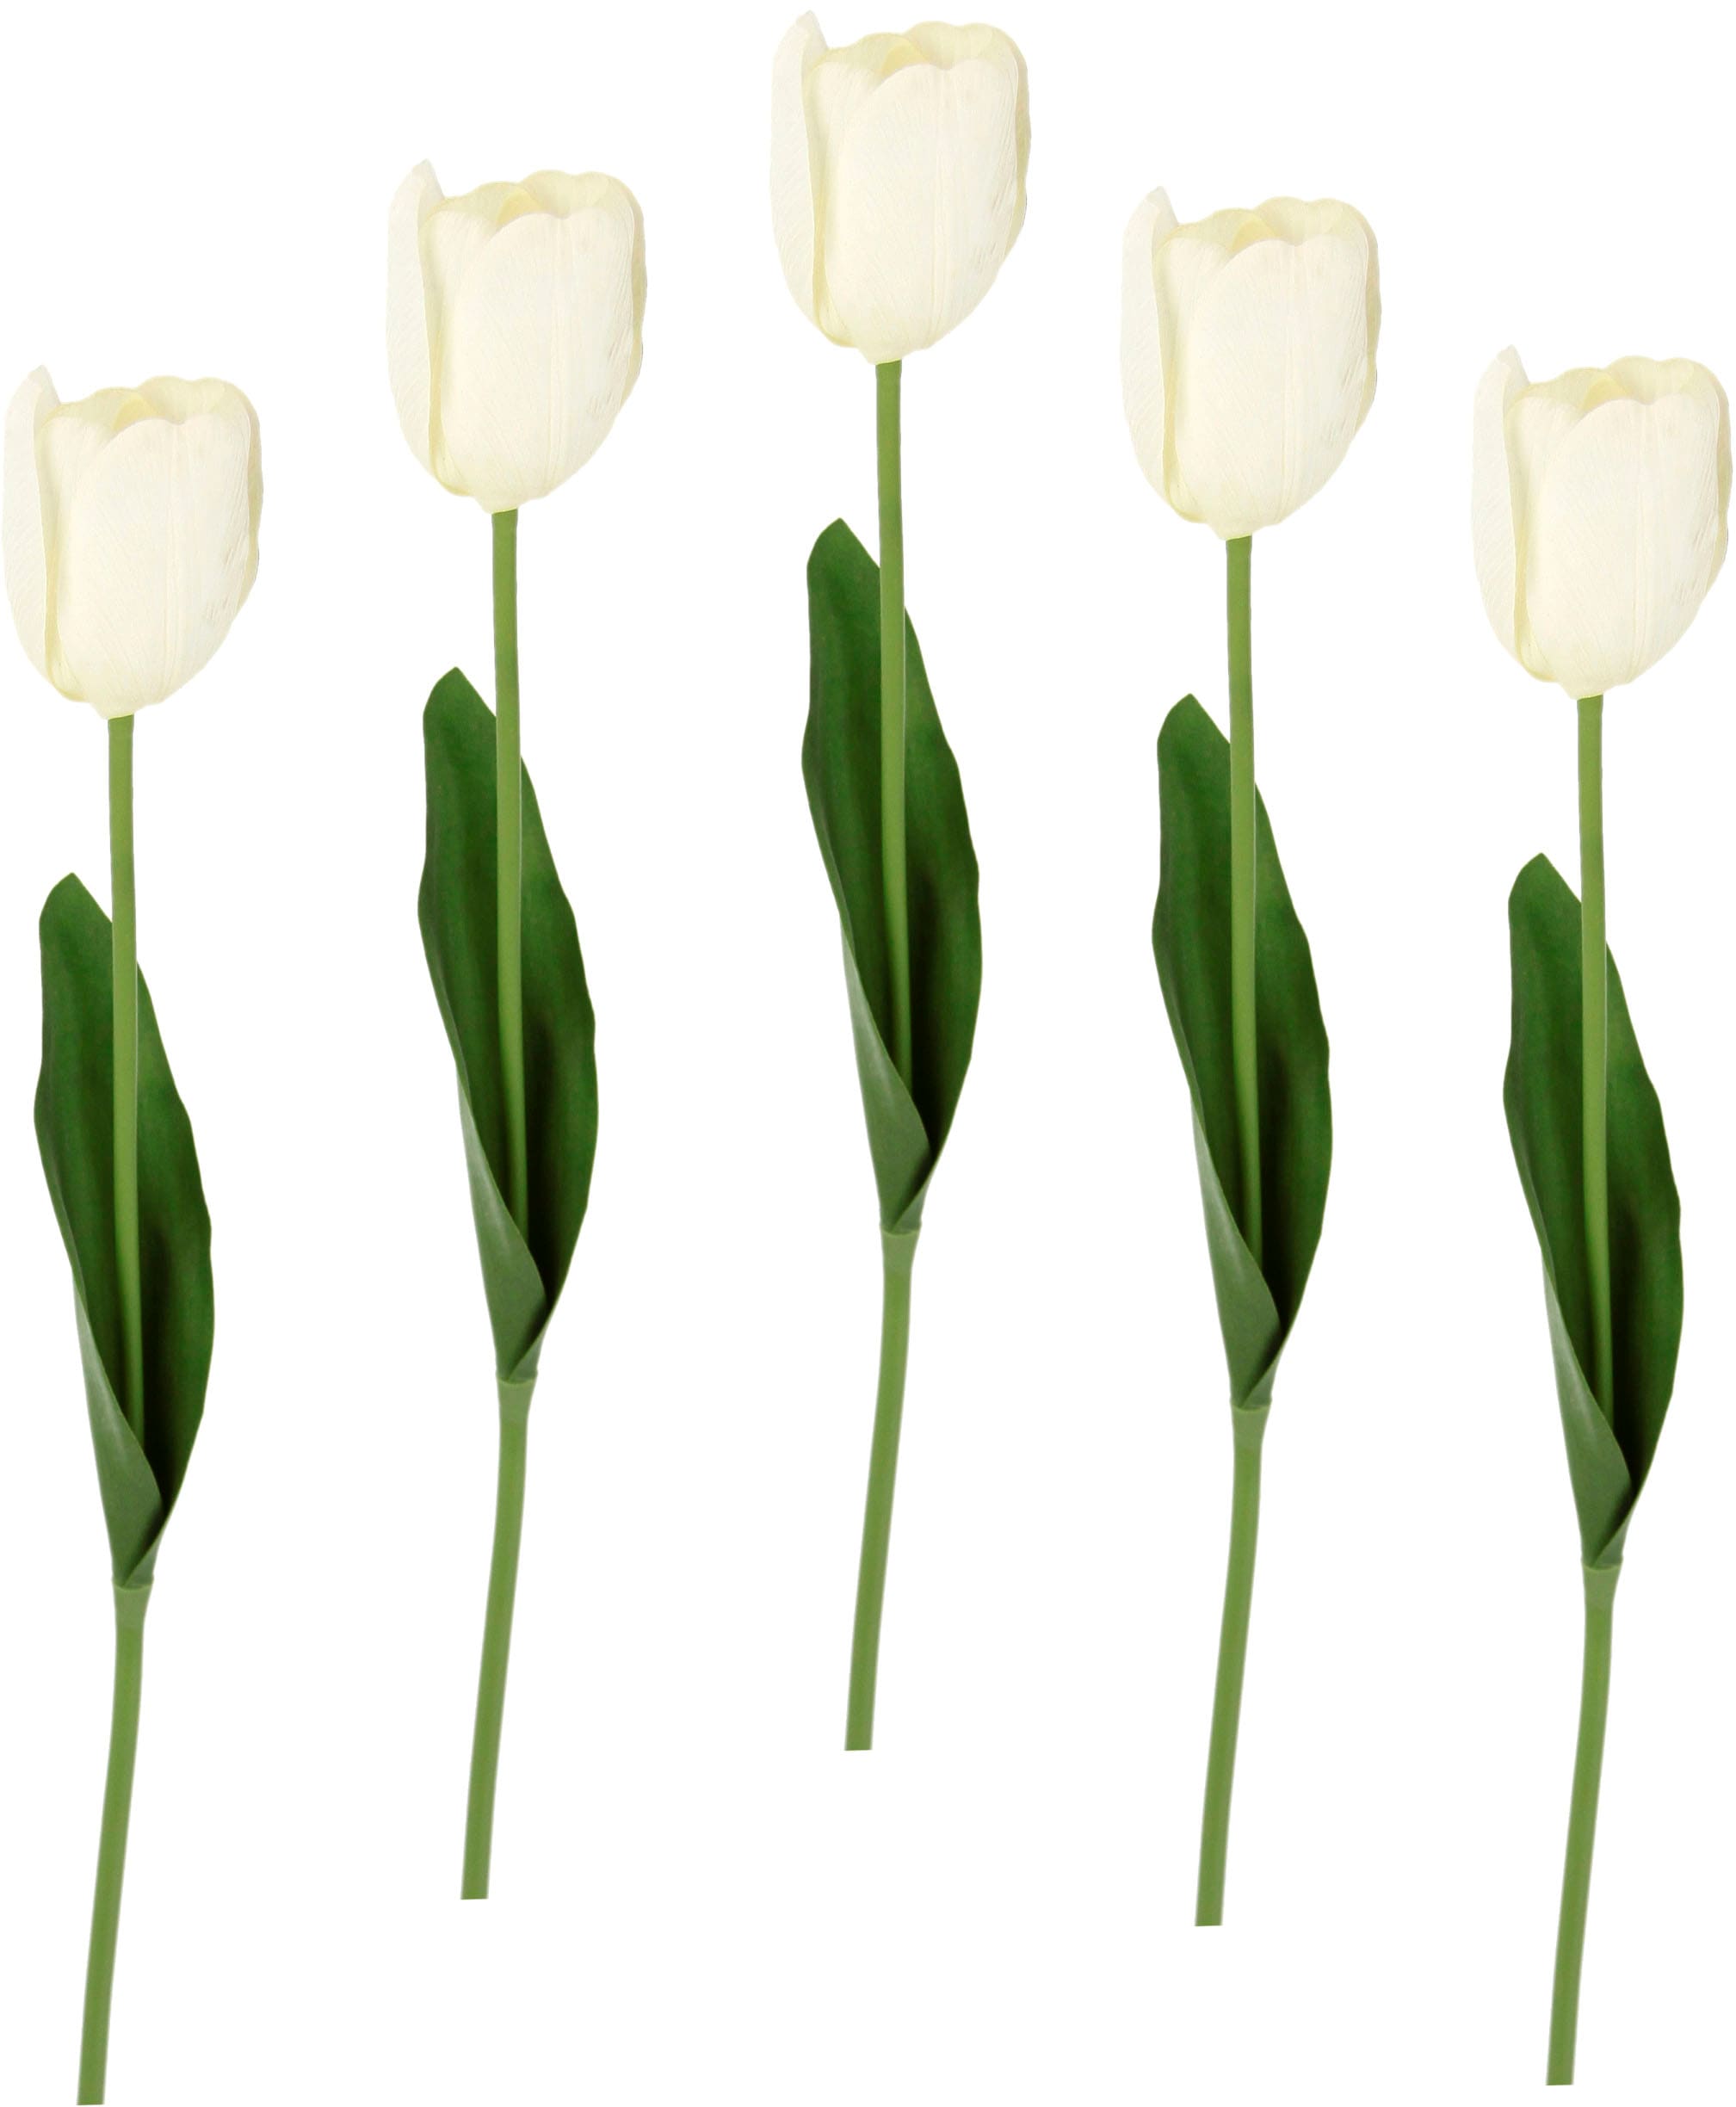 I.GE.A. Kunstblume »Real Touch Tulpen«, 5er Stielblume künstliche jetzt kaufen Tulpenknospen, Set Kunstblumen